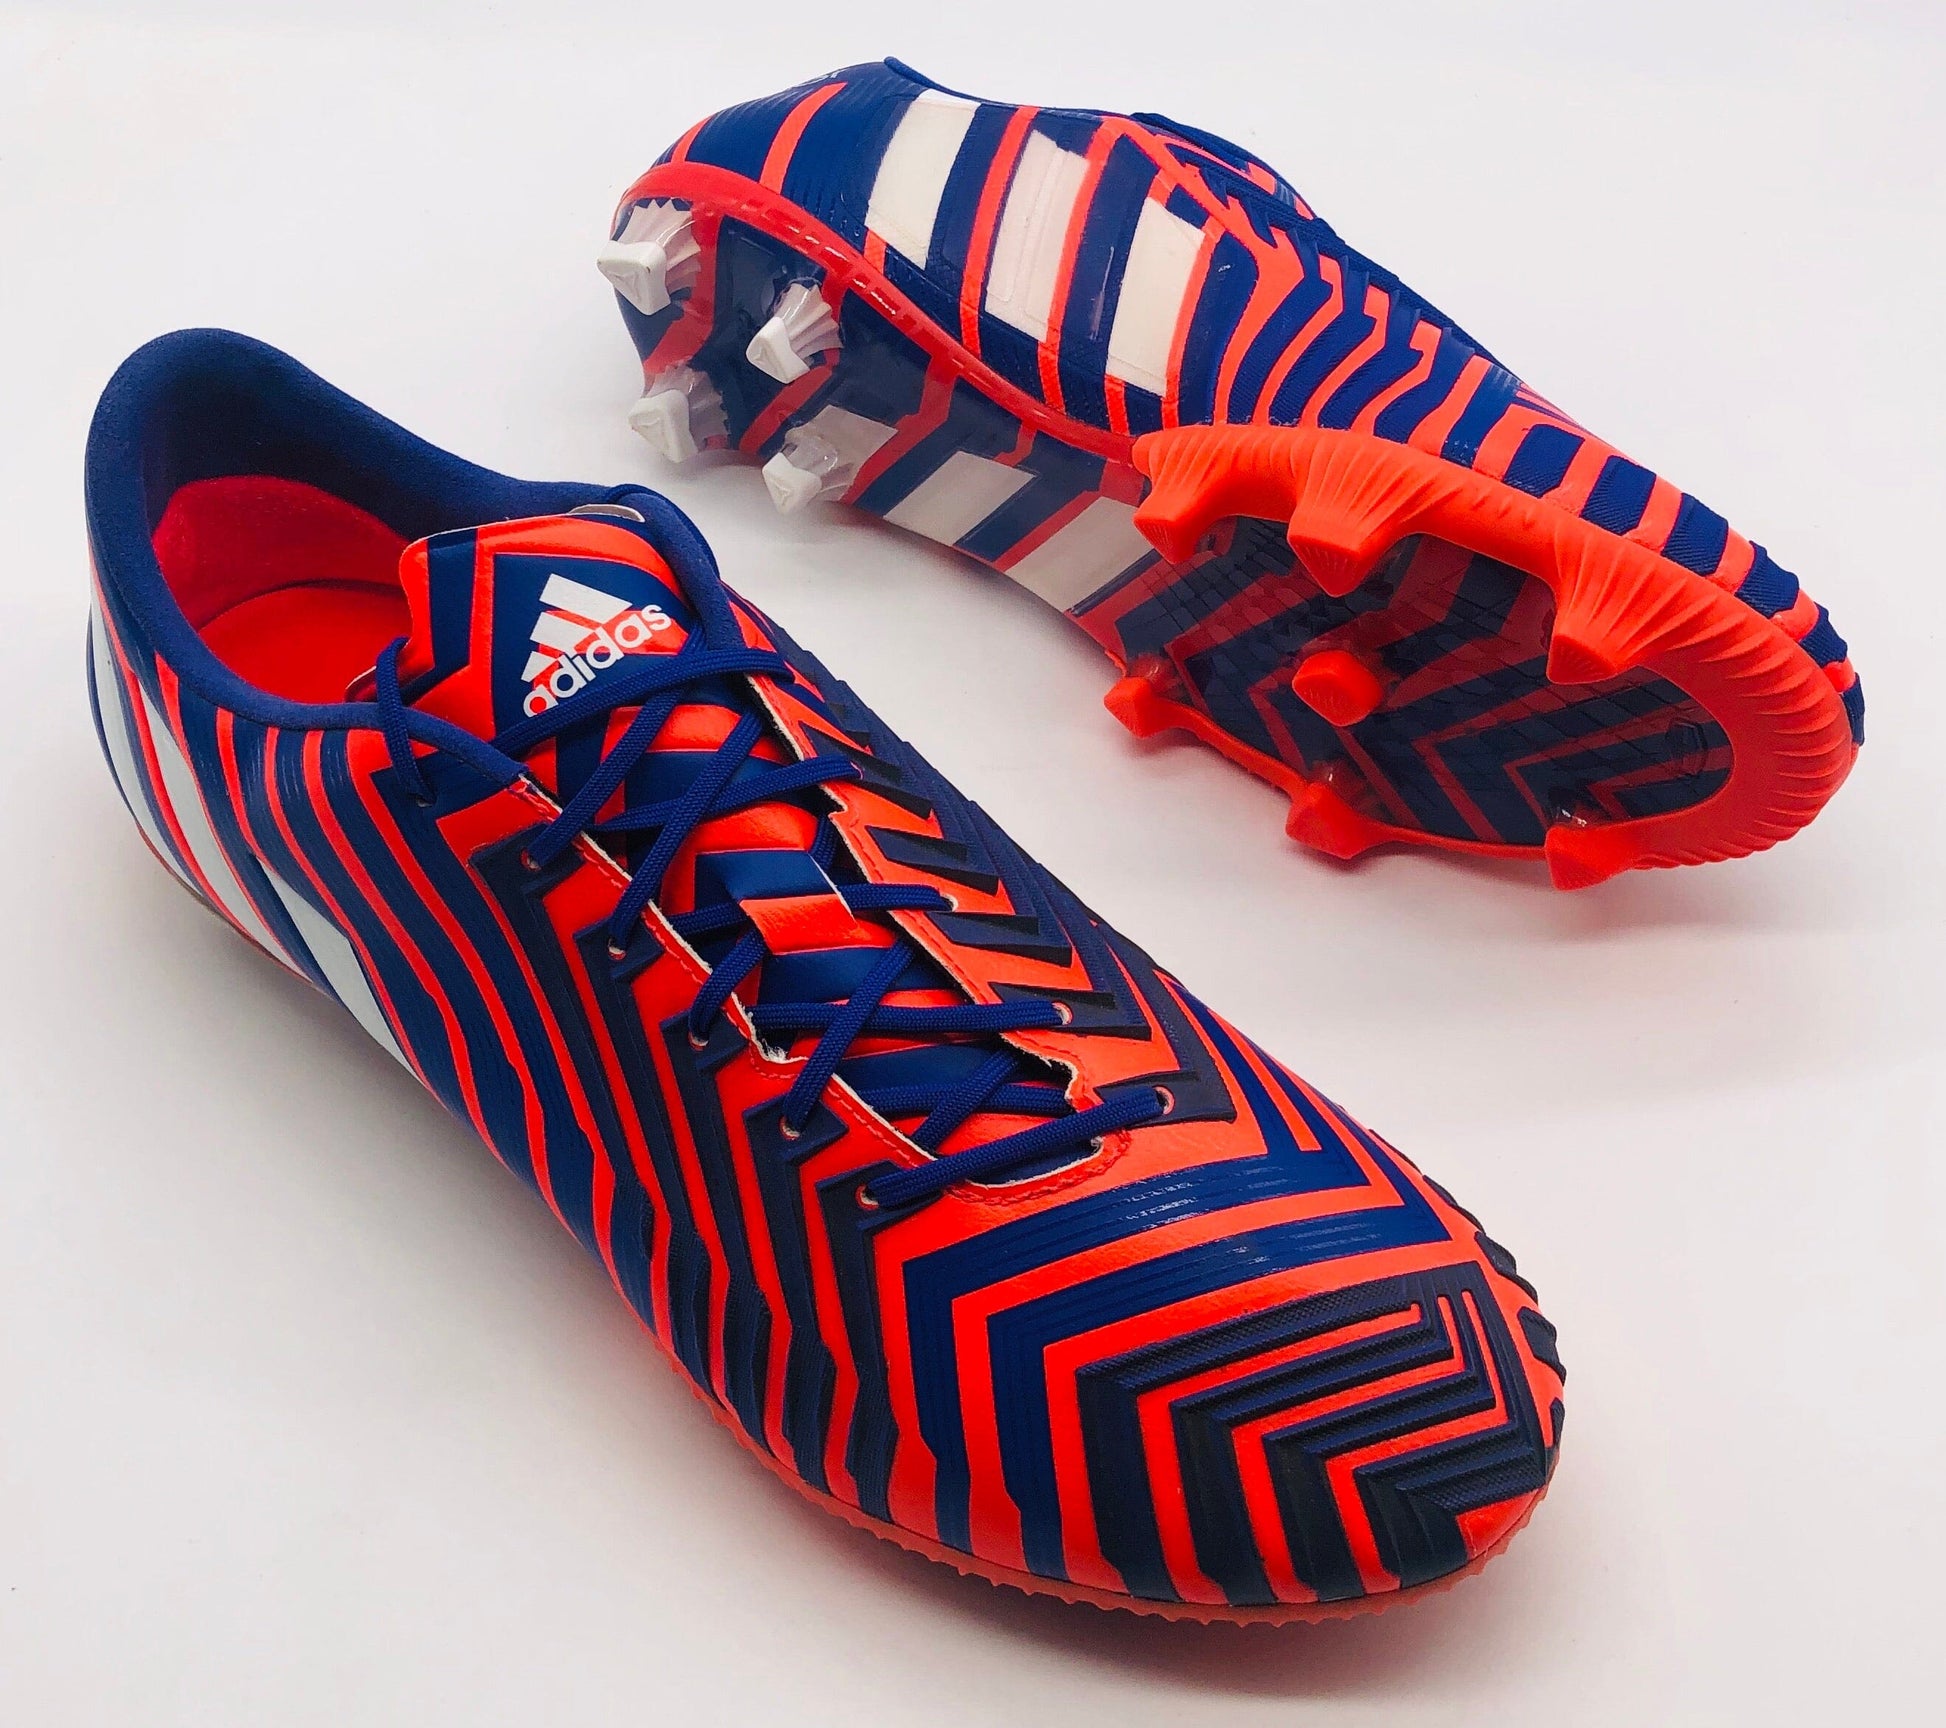 Adidas Instinct – Classic Football Boots Ltd